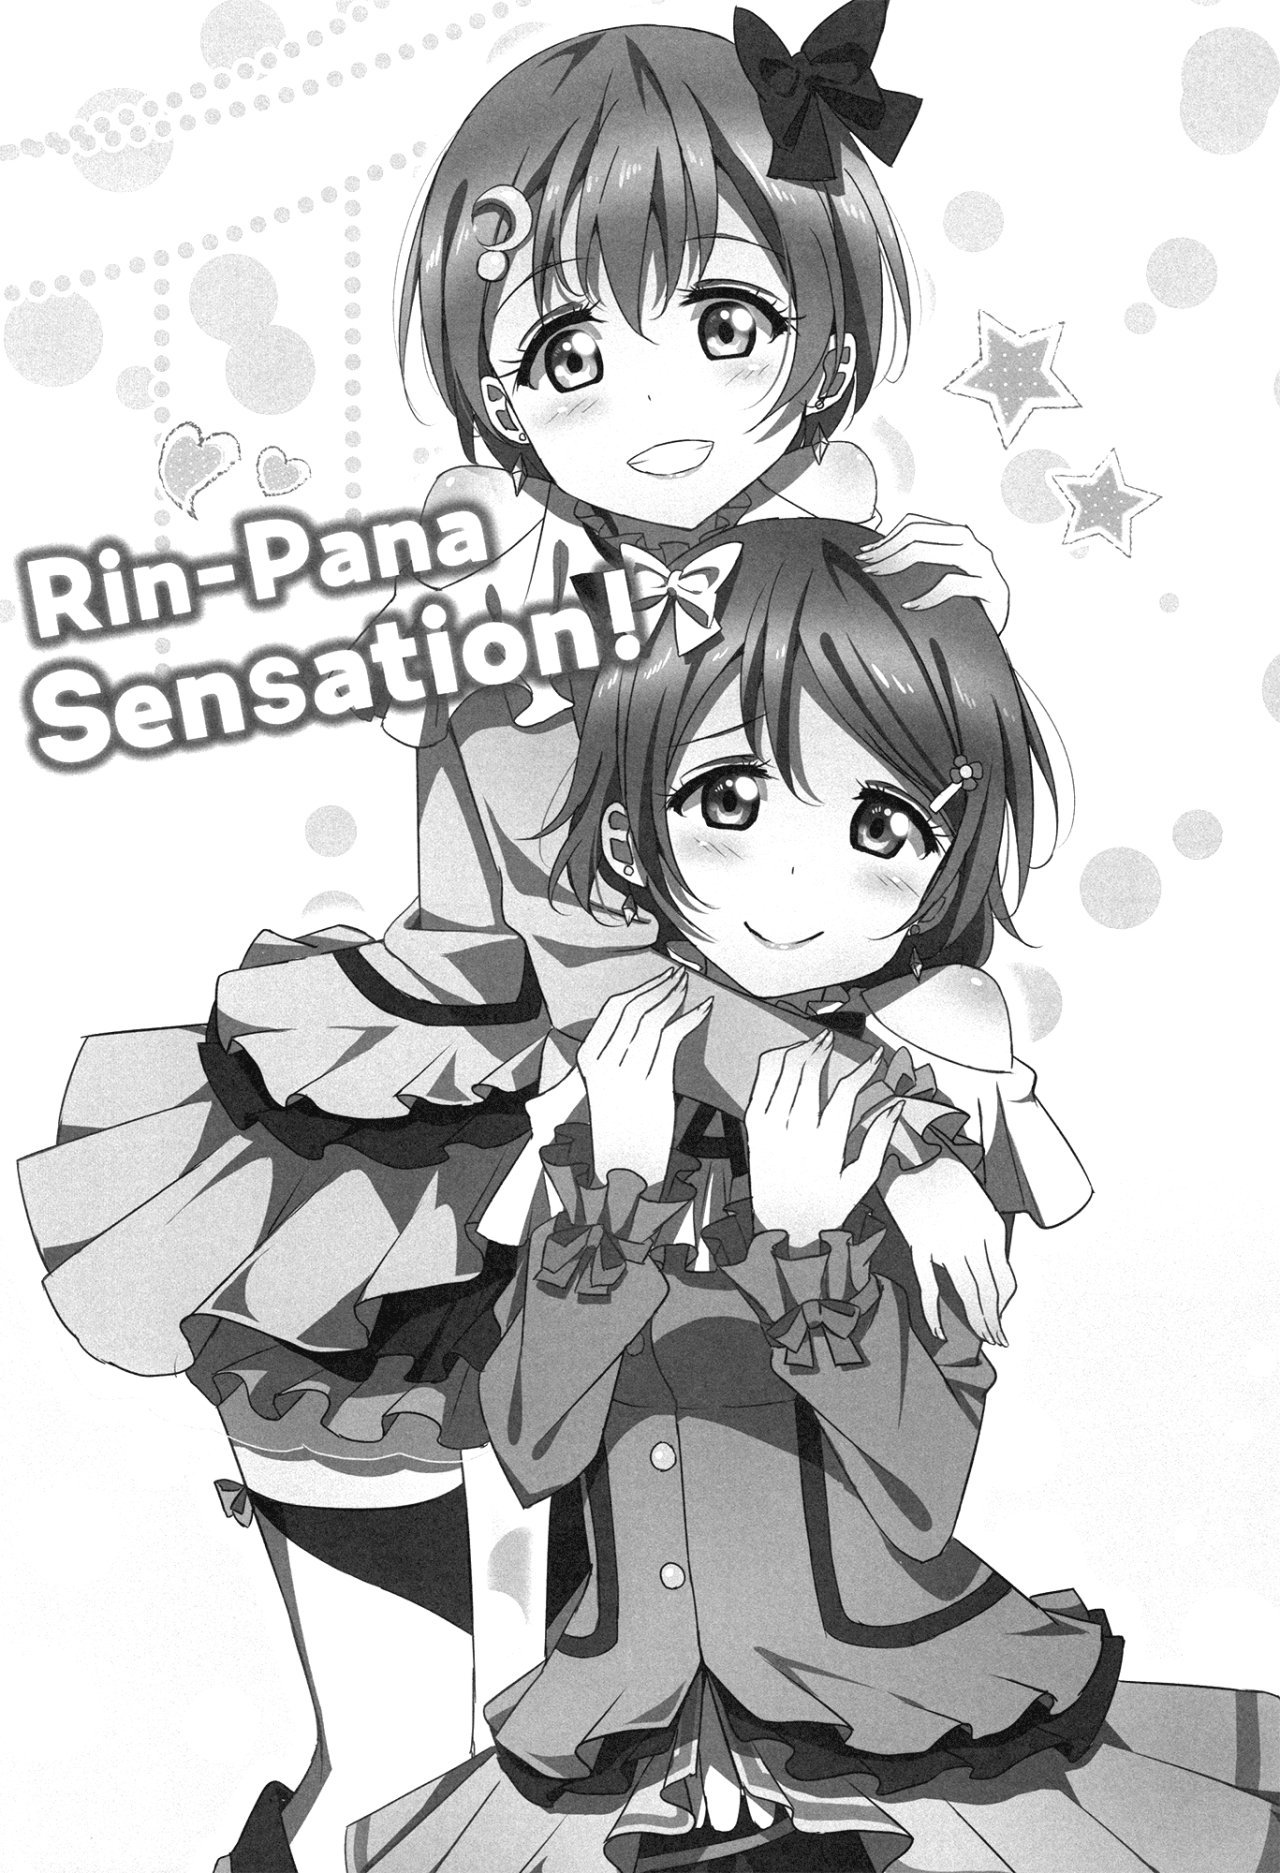 Rin-Pana 01 - 1